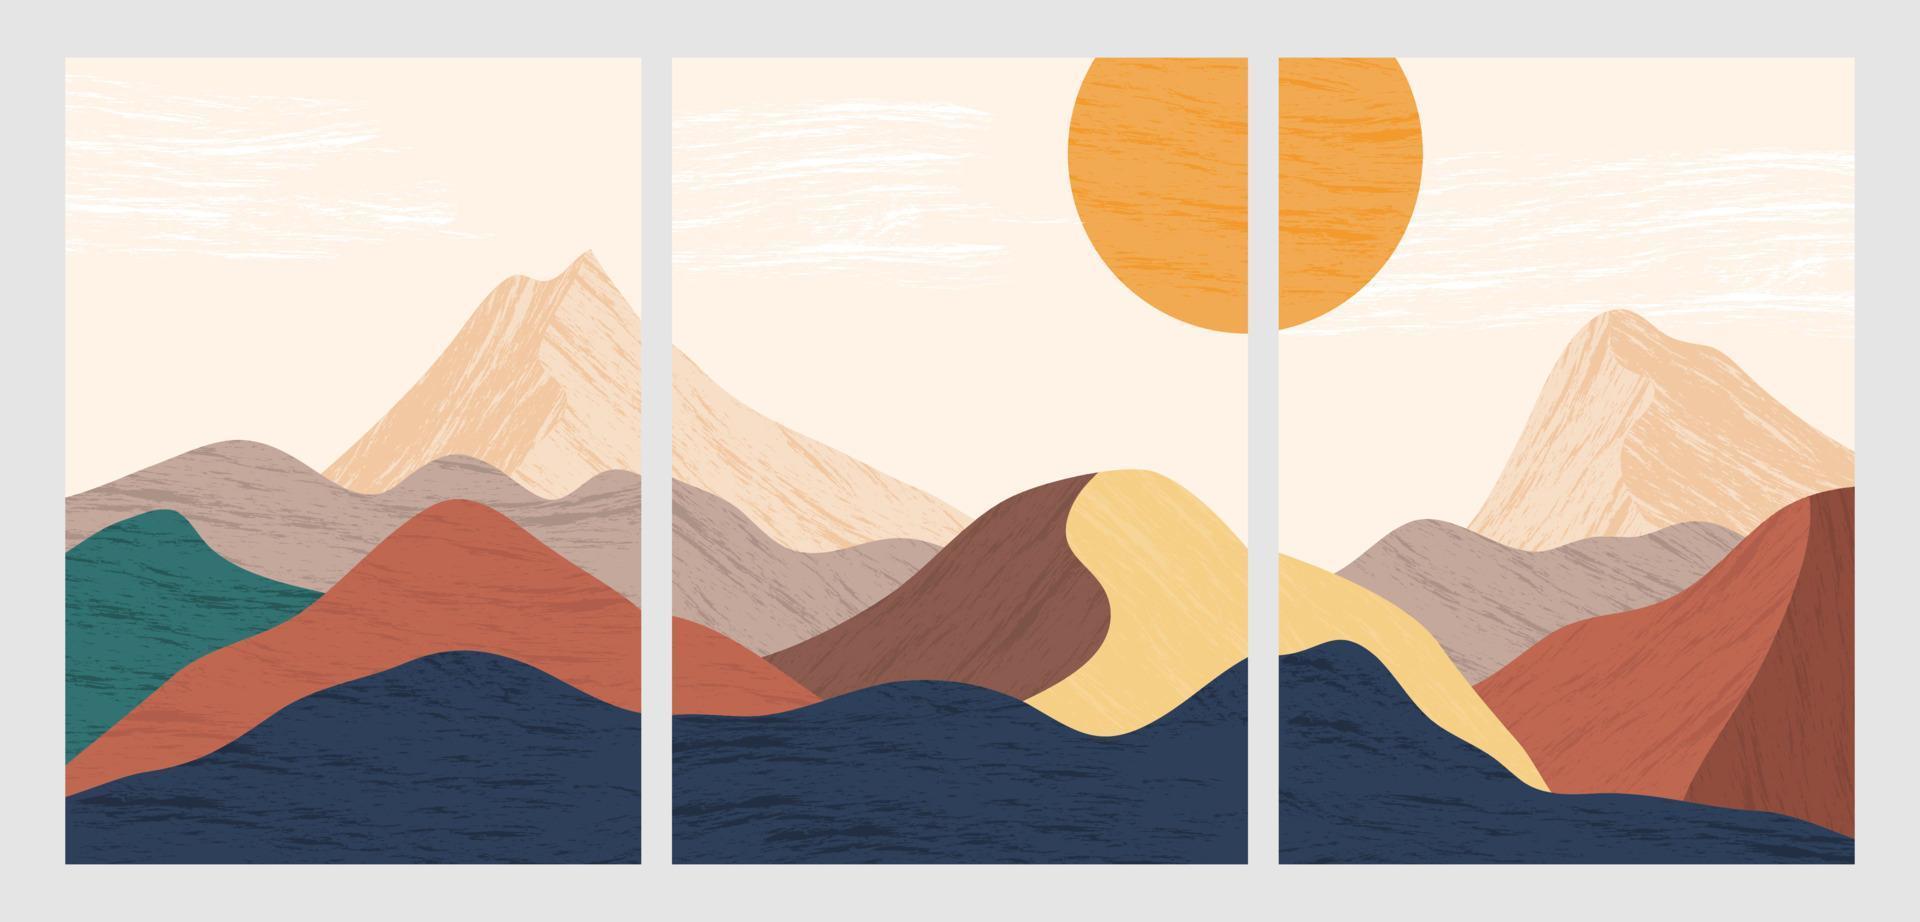 Geometric mountain landscape background in scandinavian style. Vector illustration